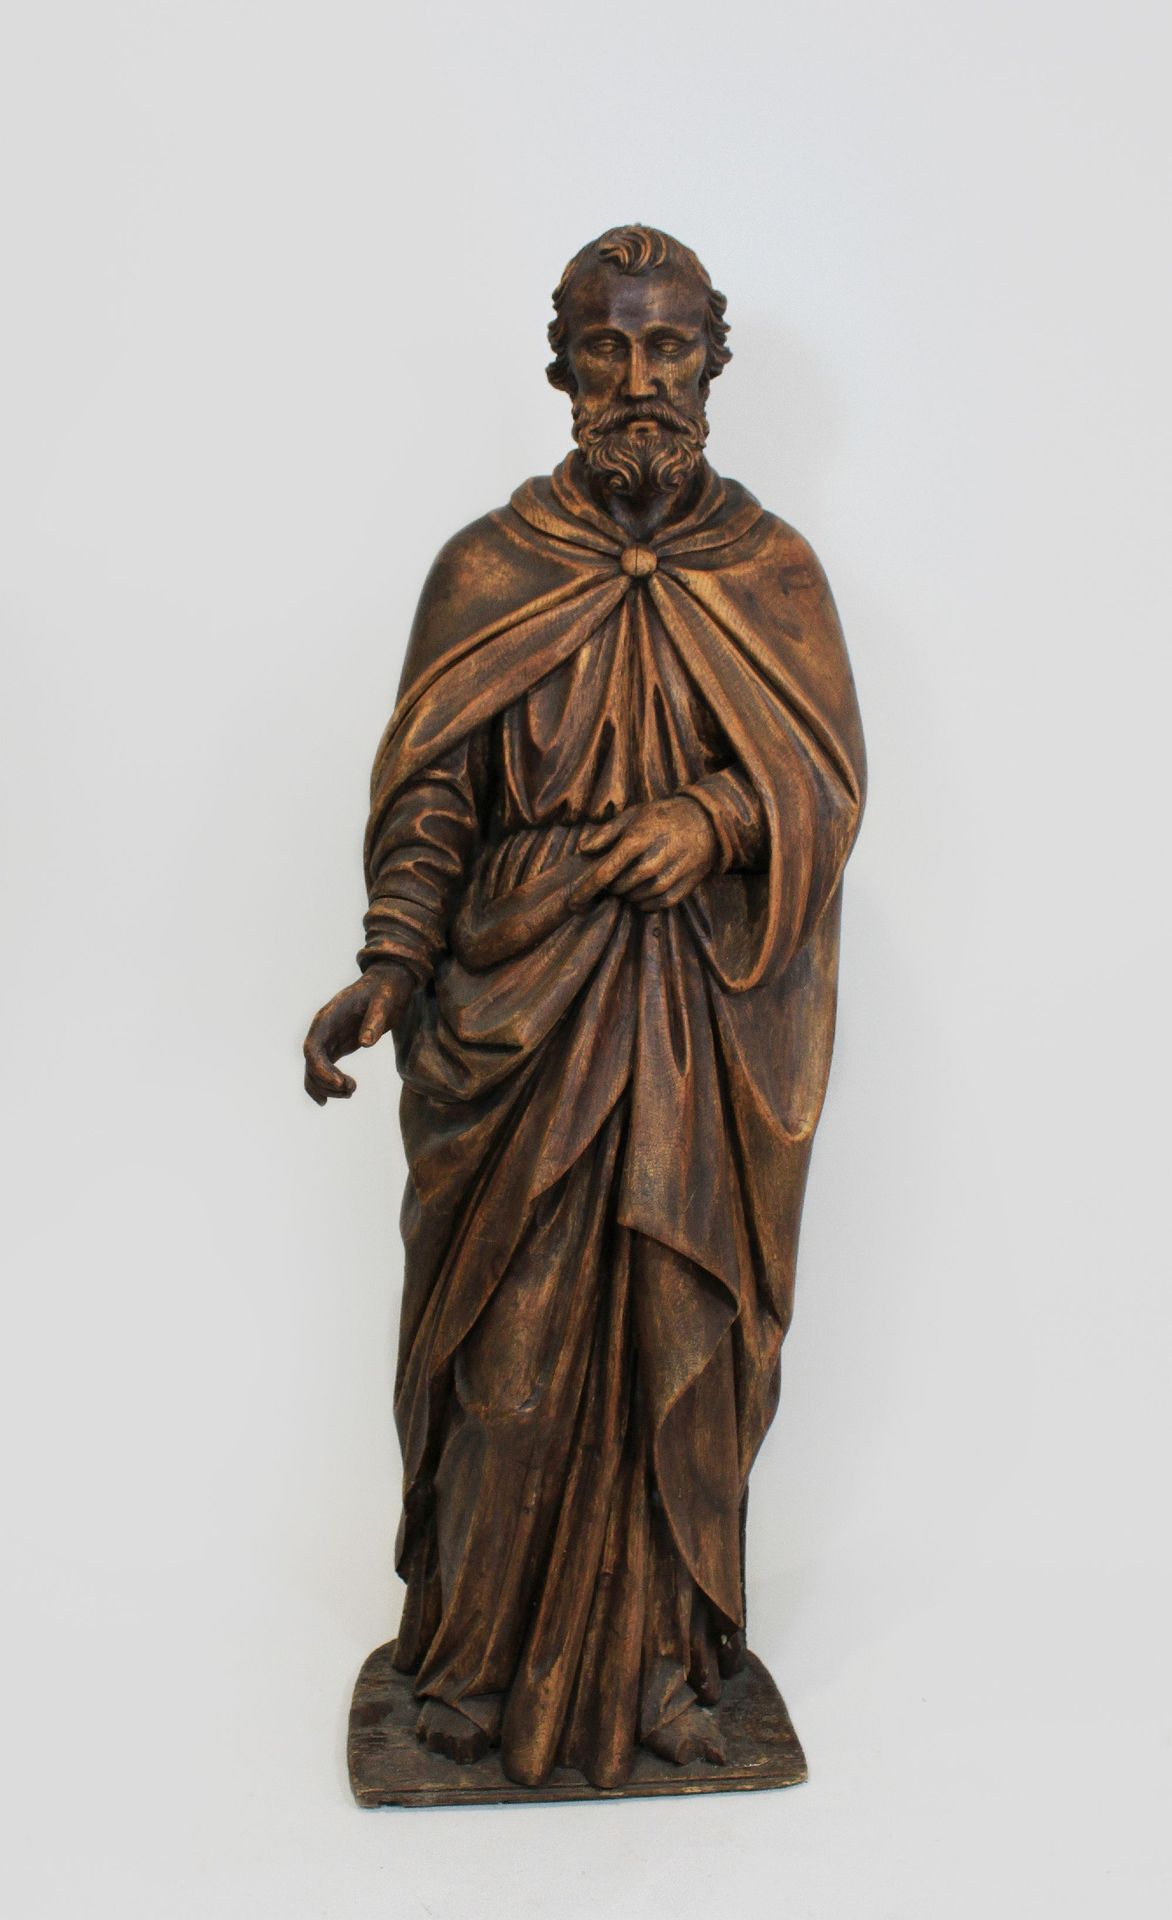 Sakralfigur, 18./19. Jh, Holz Figura sagrada, siglo XVIII/XIX, madera tallada, s&hellip;